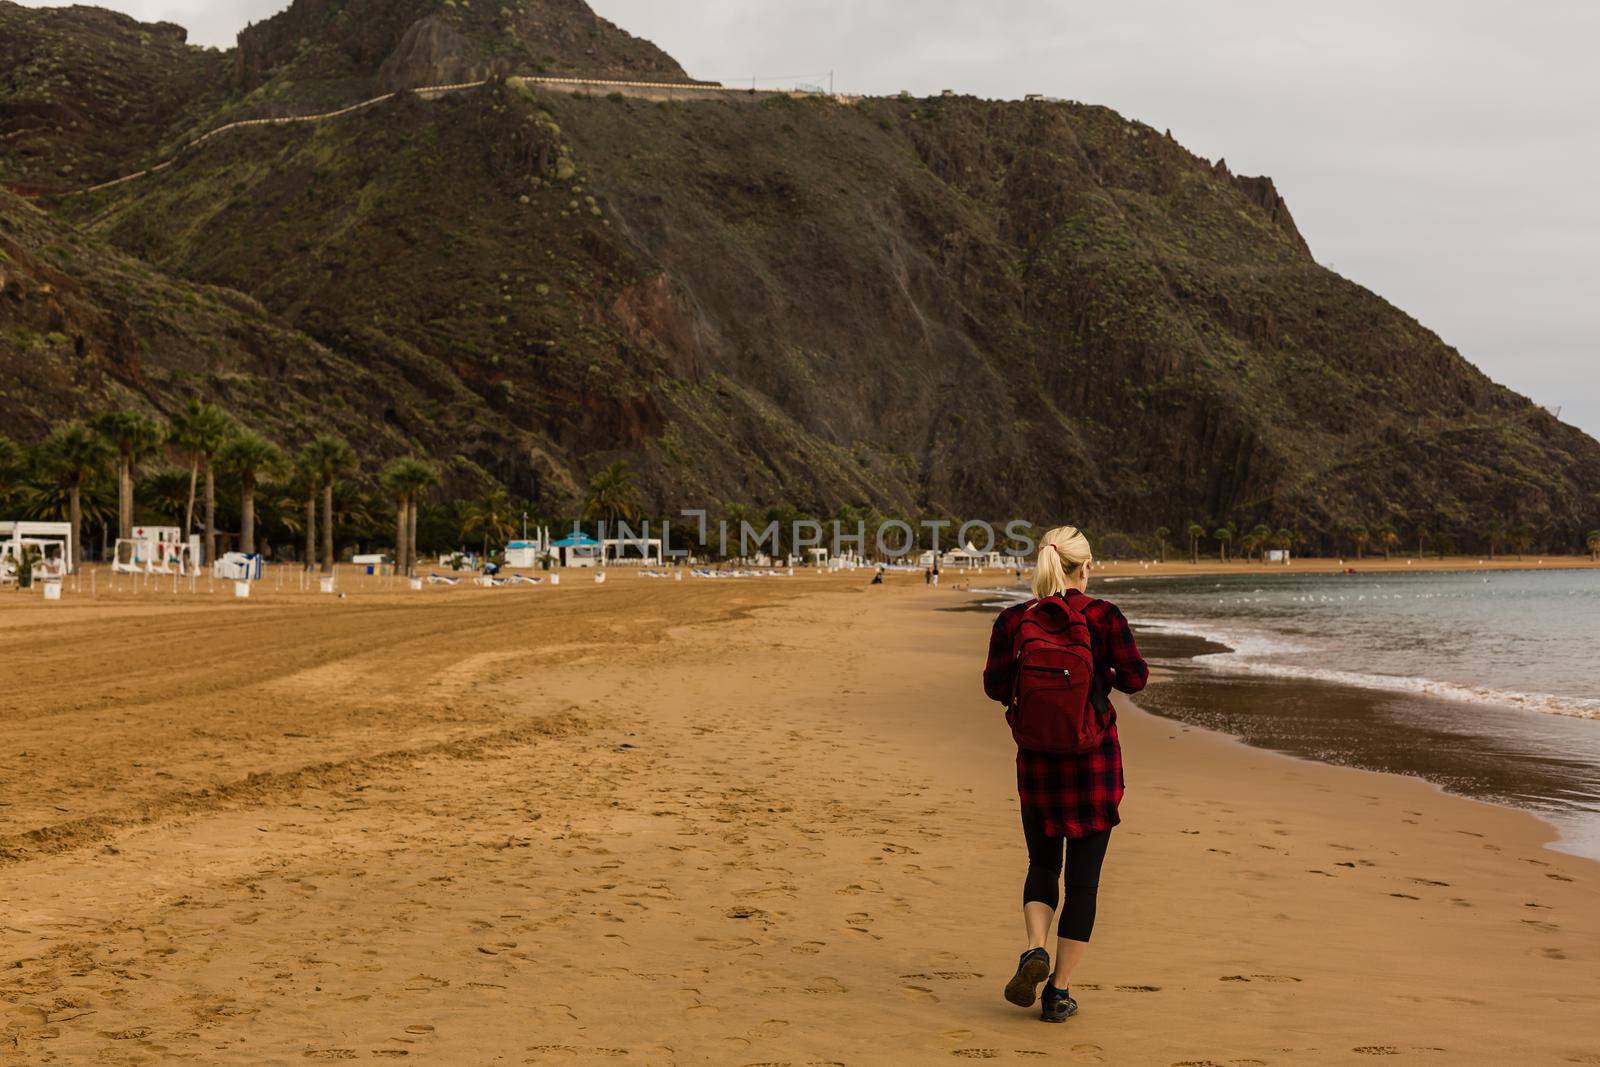 Tenerife. Woman traveler tourist looking at beach view. Playa de las Teresitas, Tenerife, Canary Islands, Spain